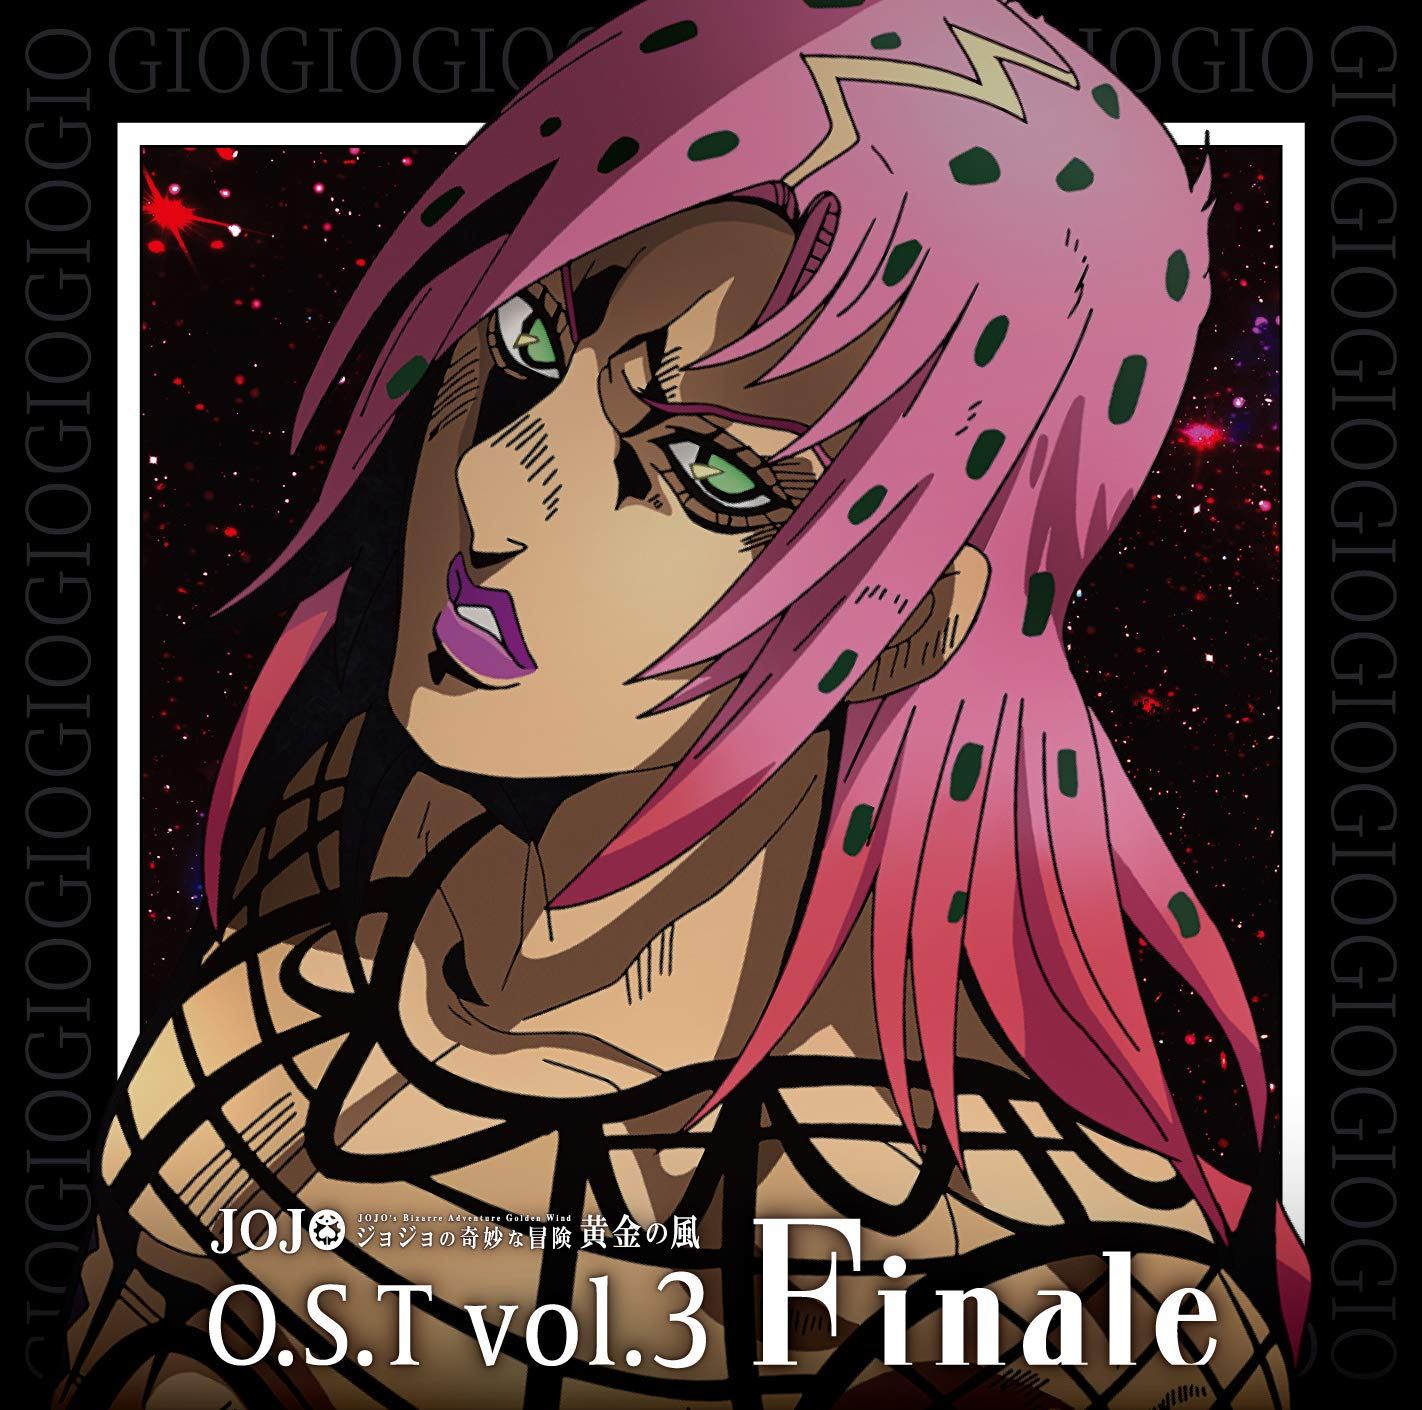 Anime Soundtrack Jojo S Bizarre Adventure Golden Wind Ost Vol 3 Finale Yugo Kanno - finale roblox id